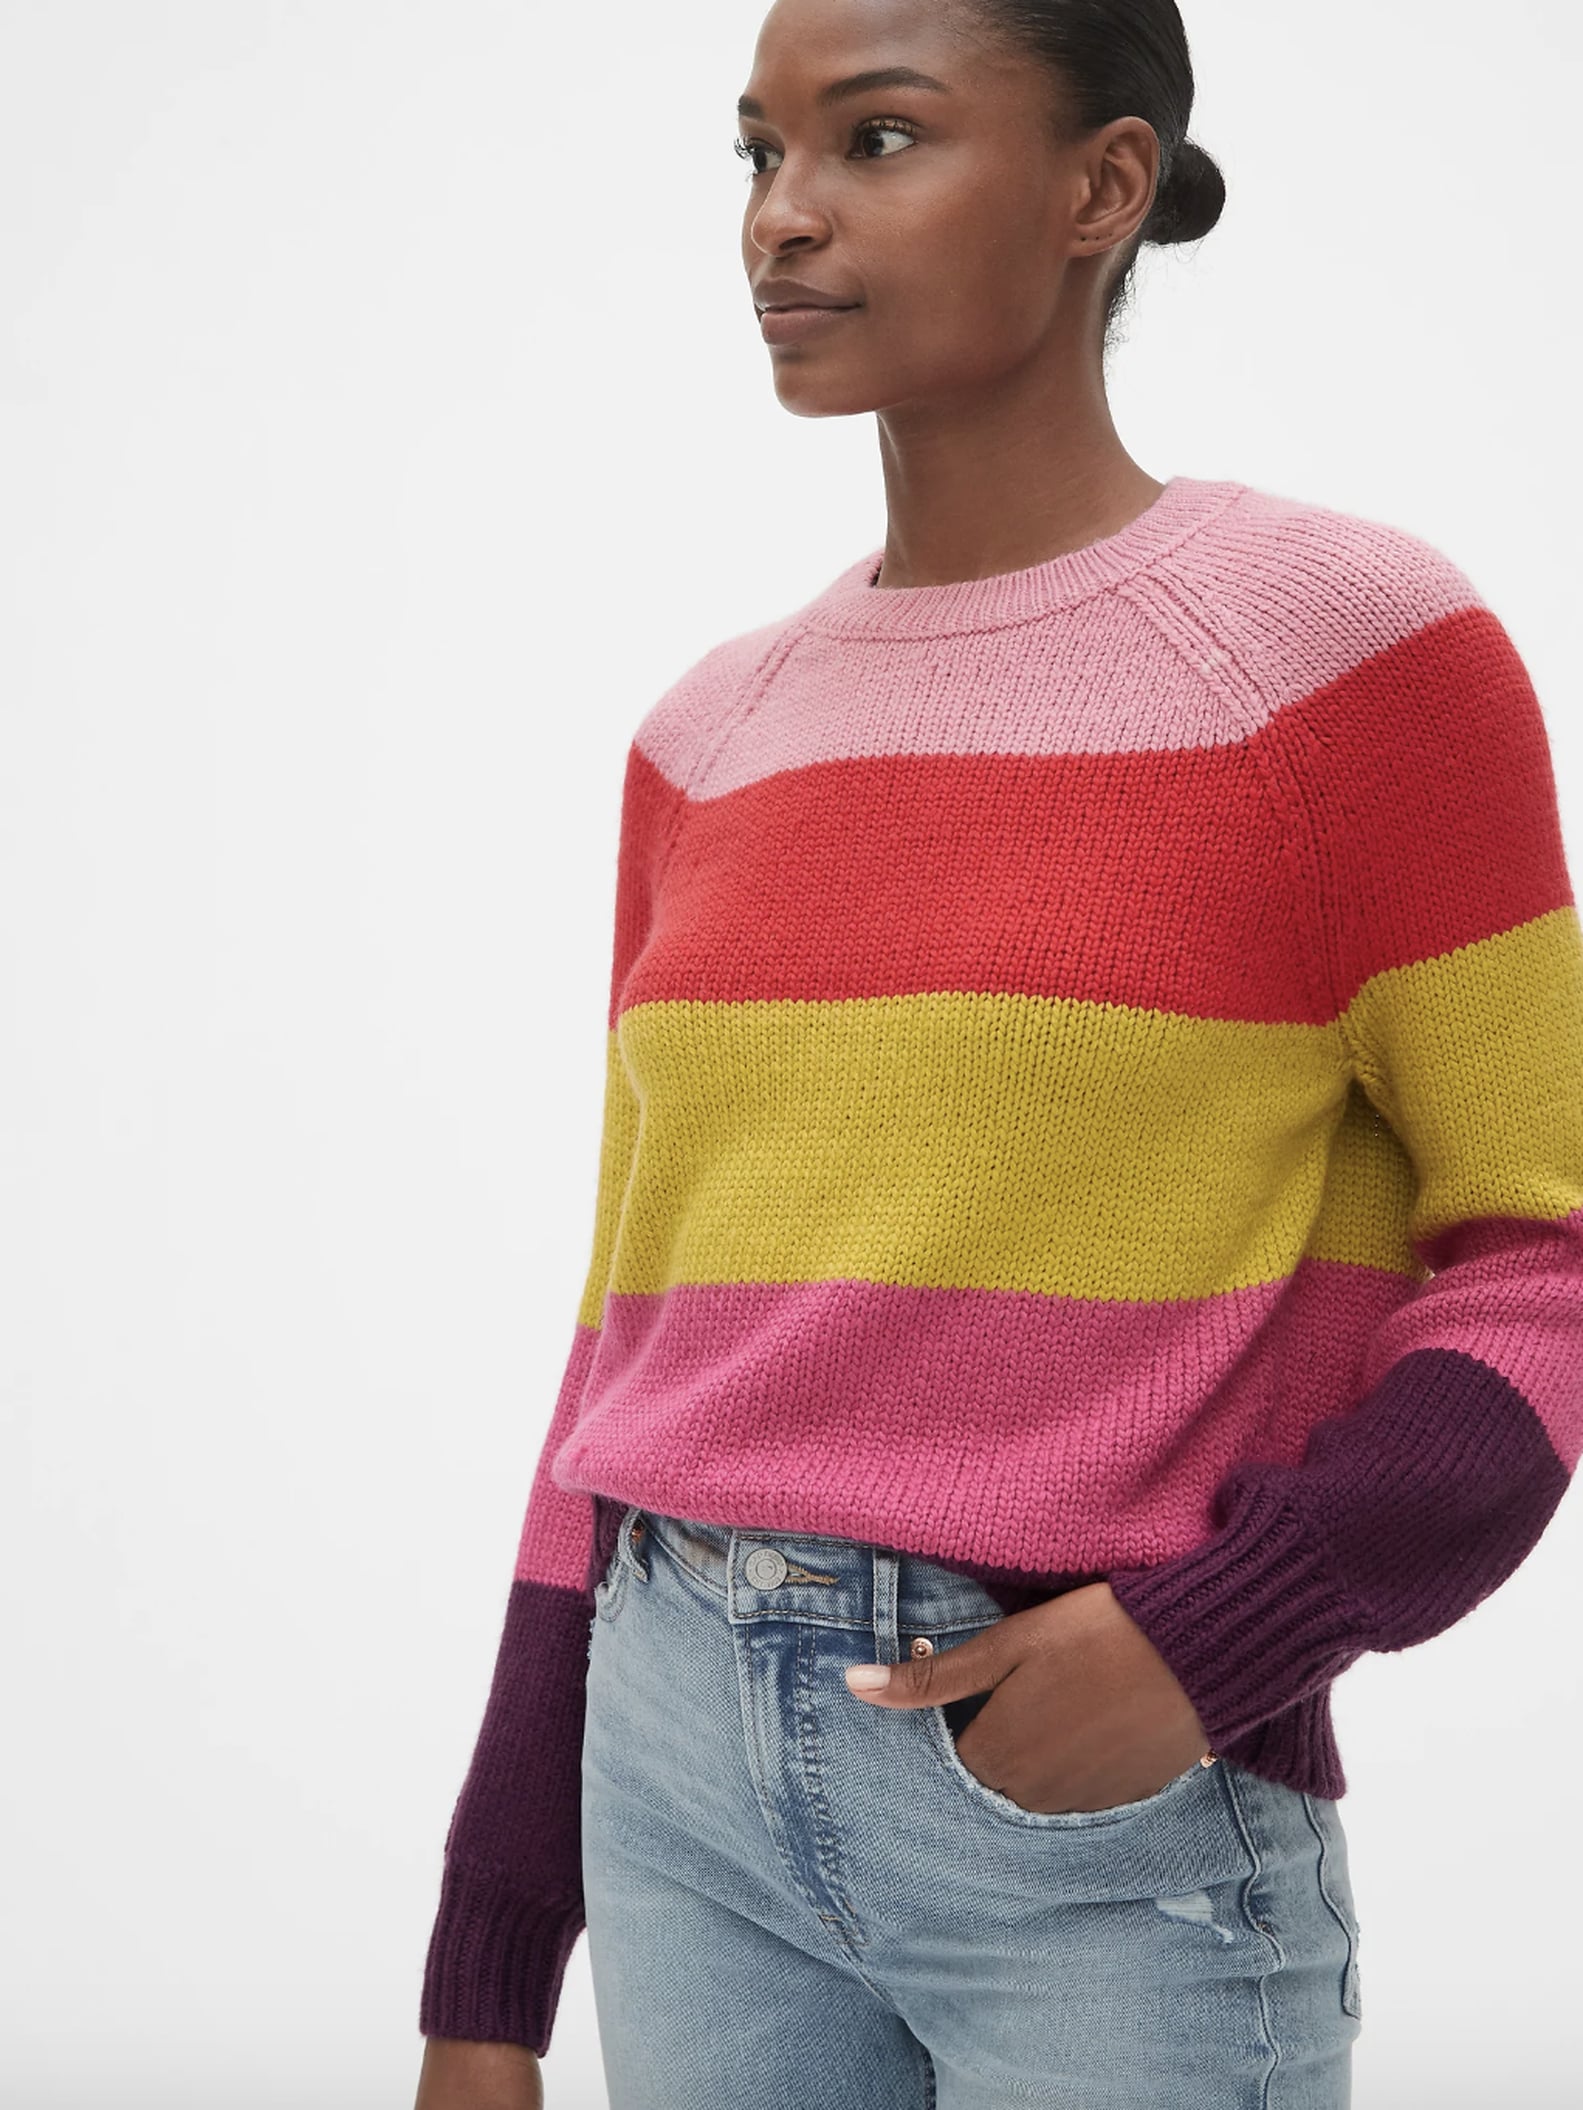 Trending Sweater Styles 2019 | POPSUGAR Fashion